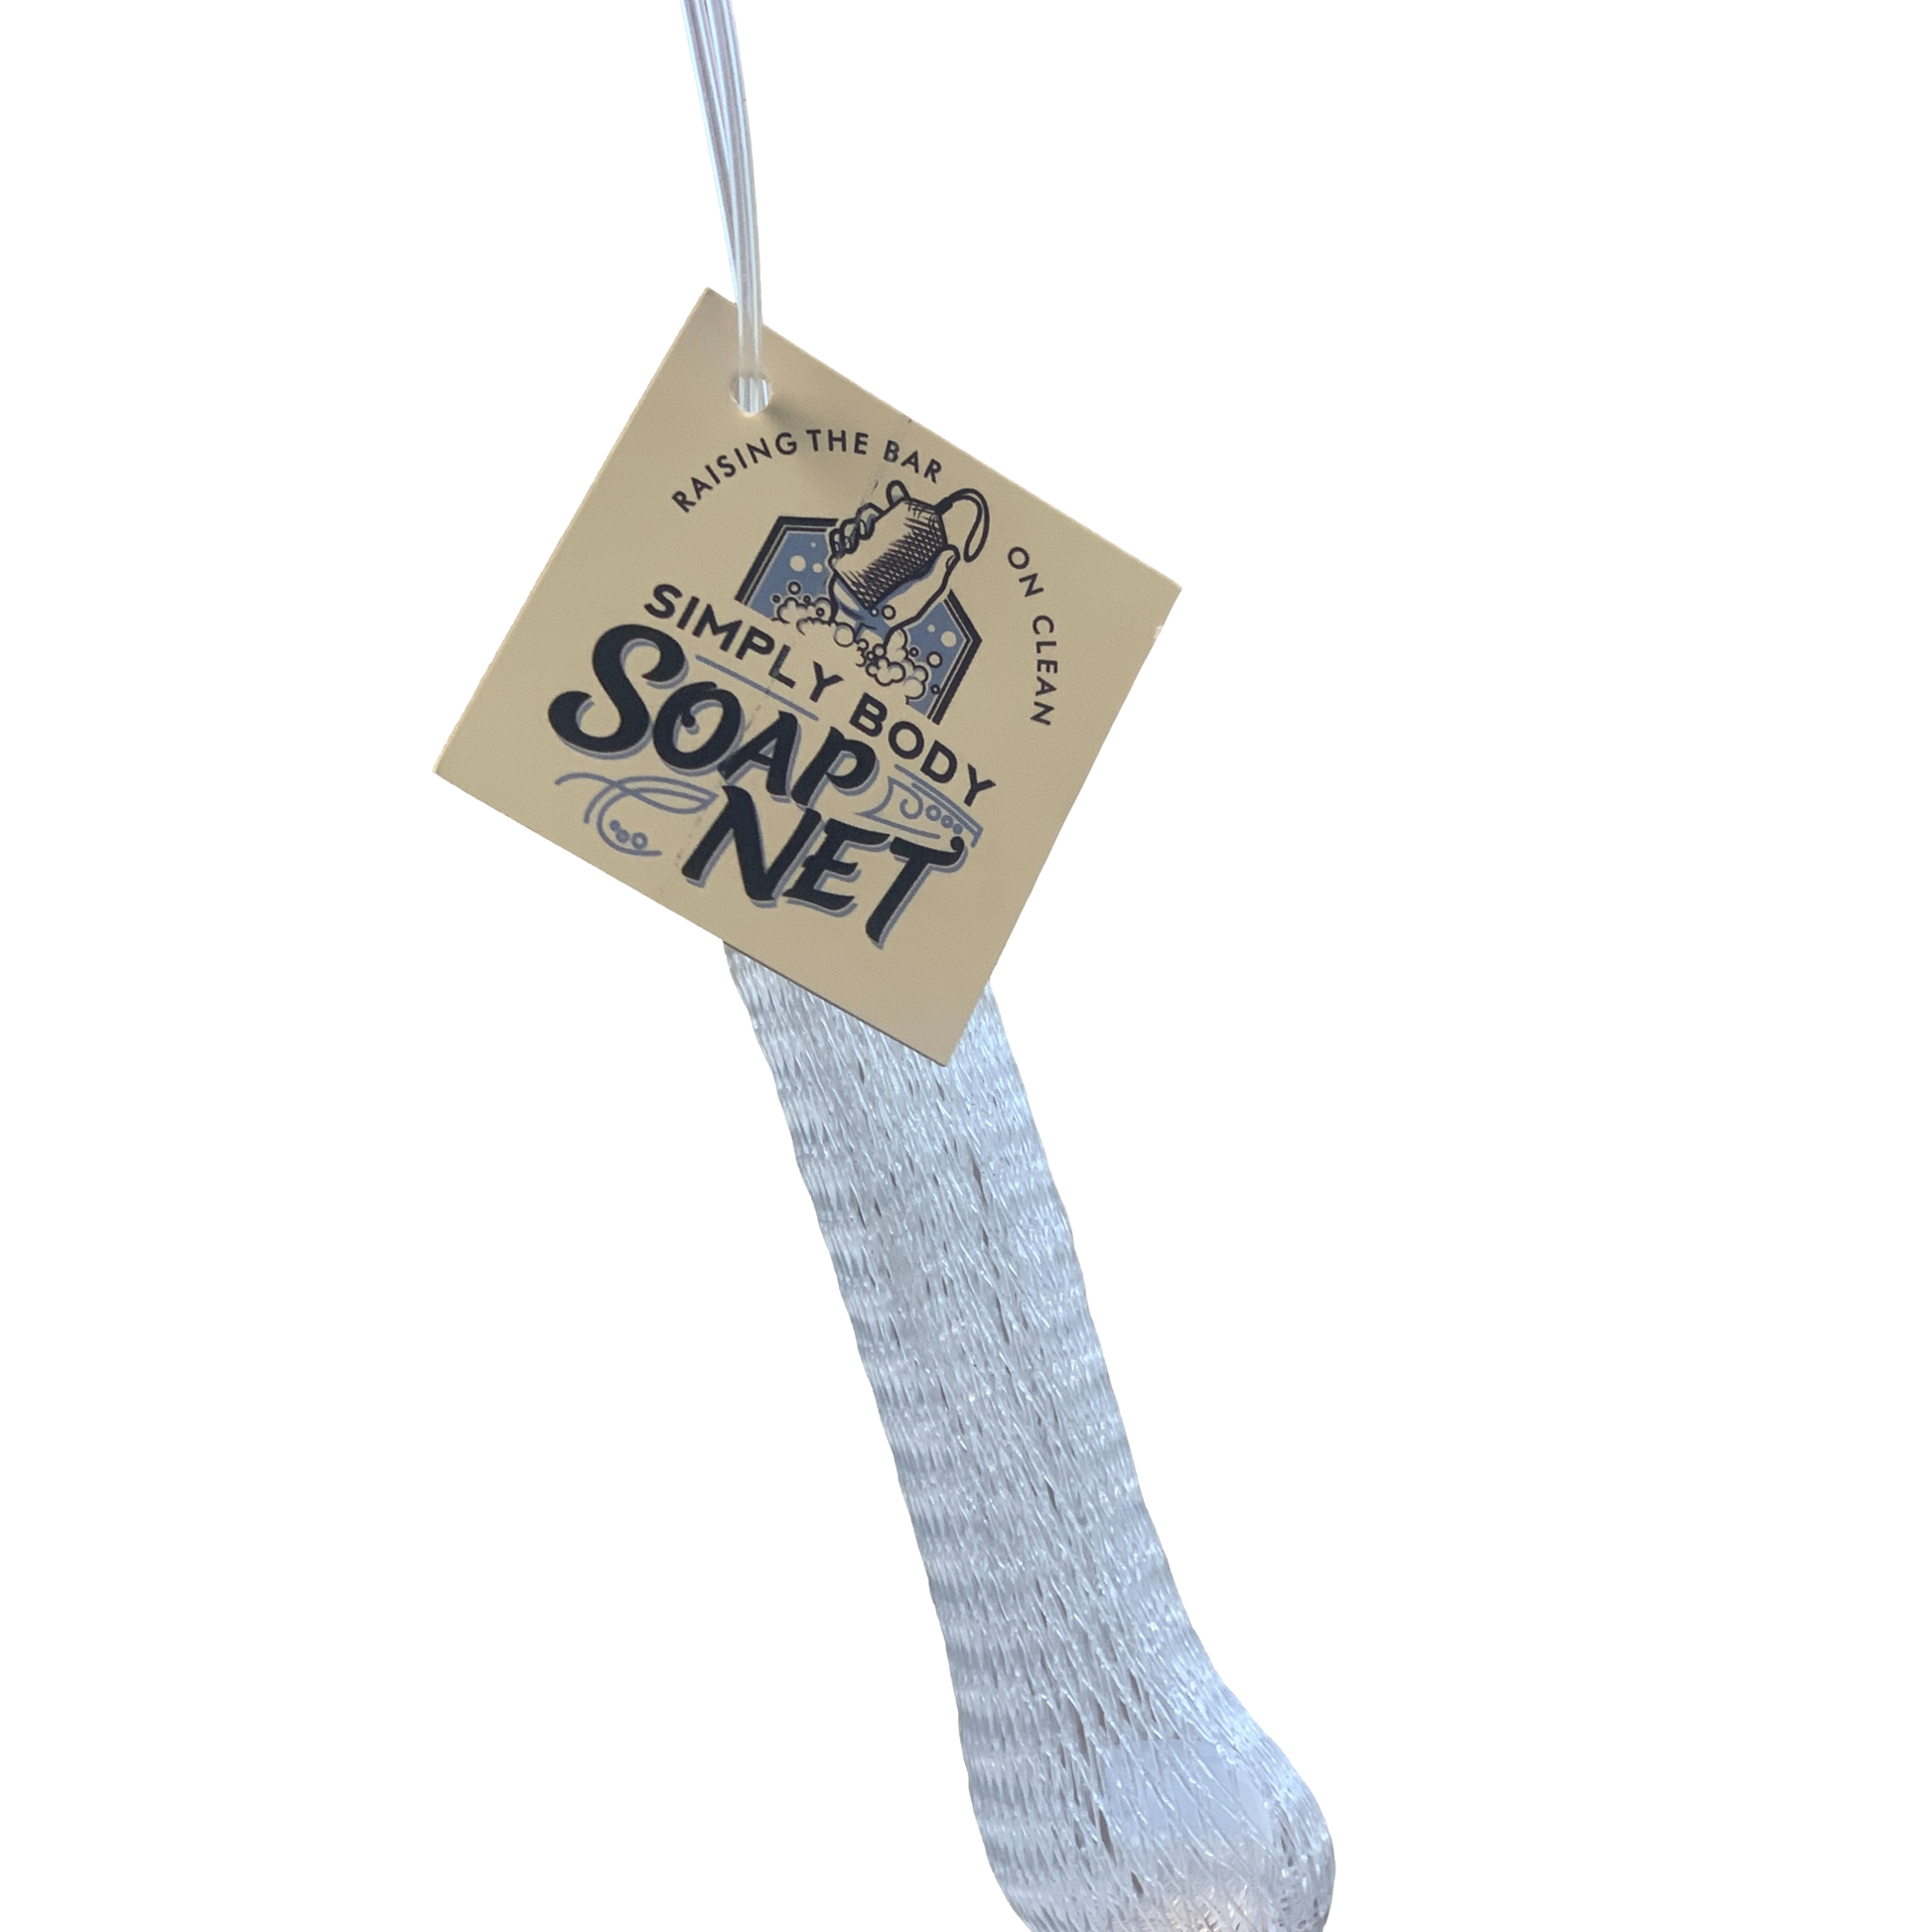 Sudsy Soapery Soap Net for Soap